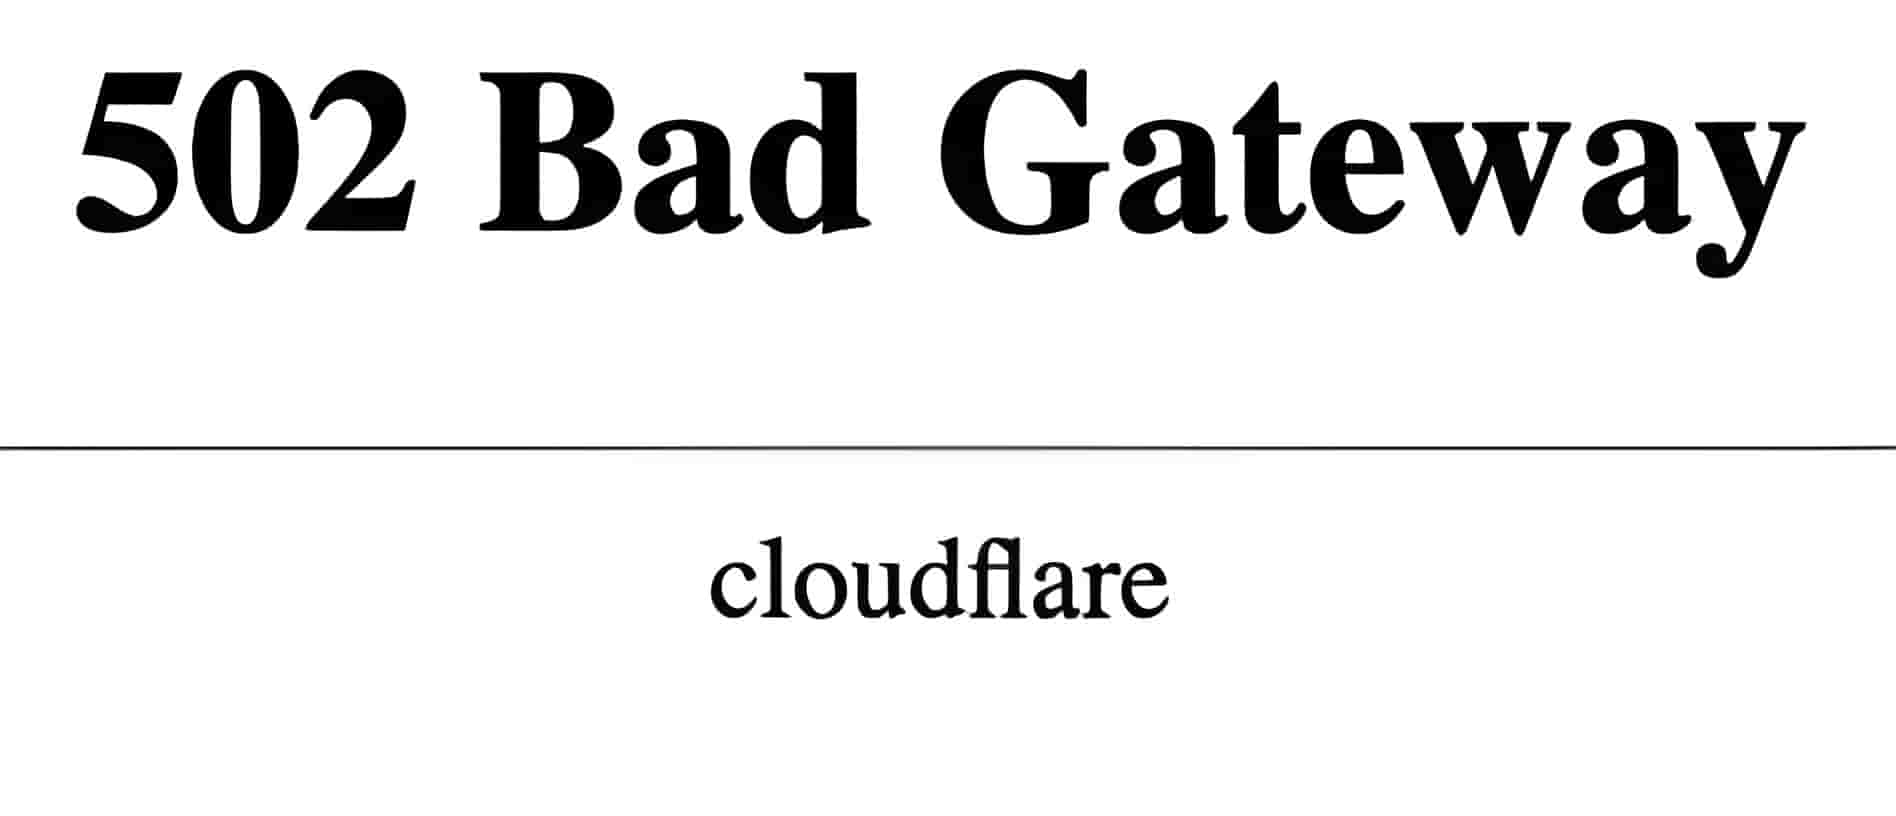 502 bad gateway cloudflare